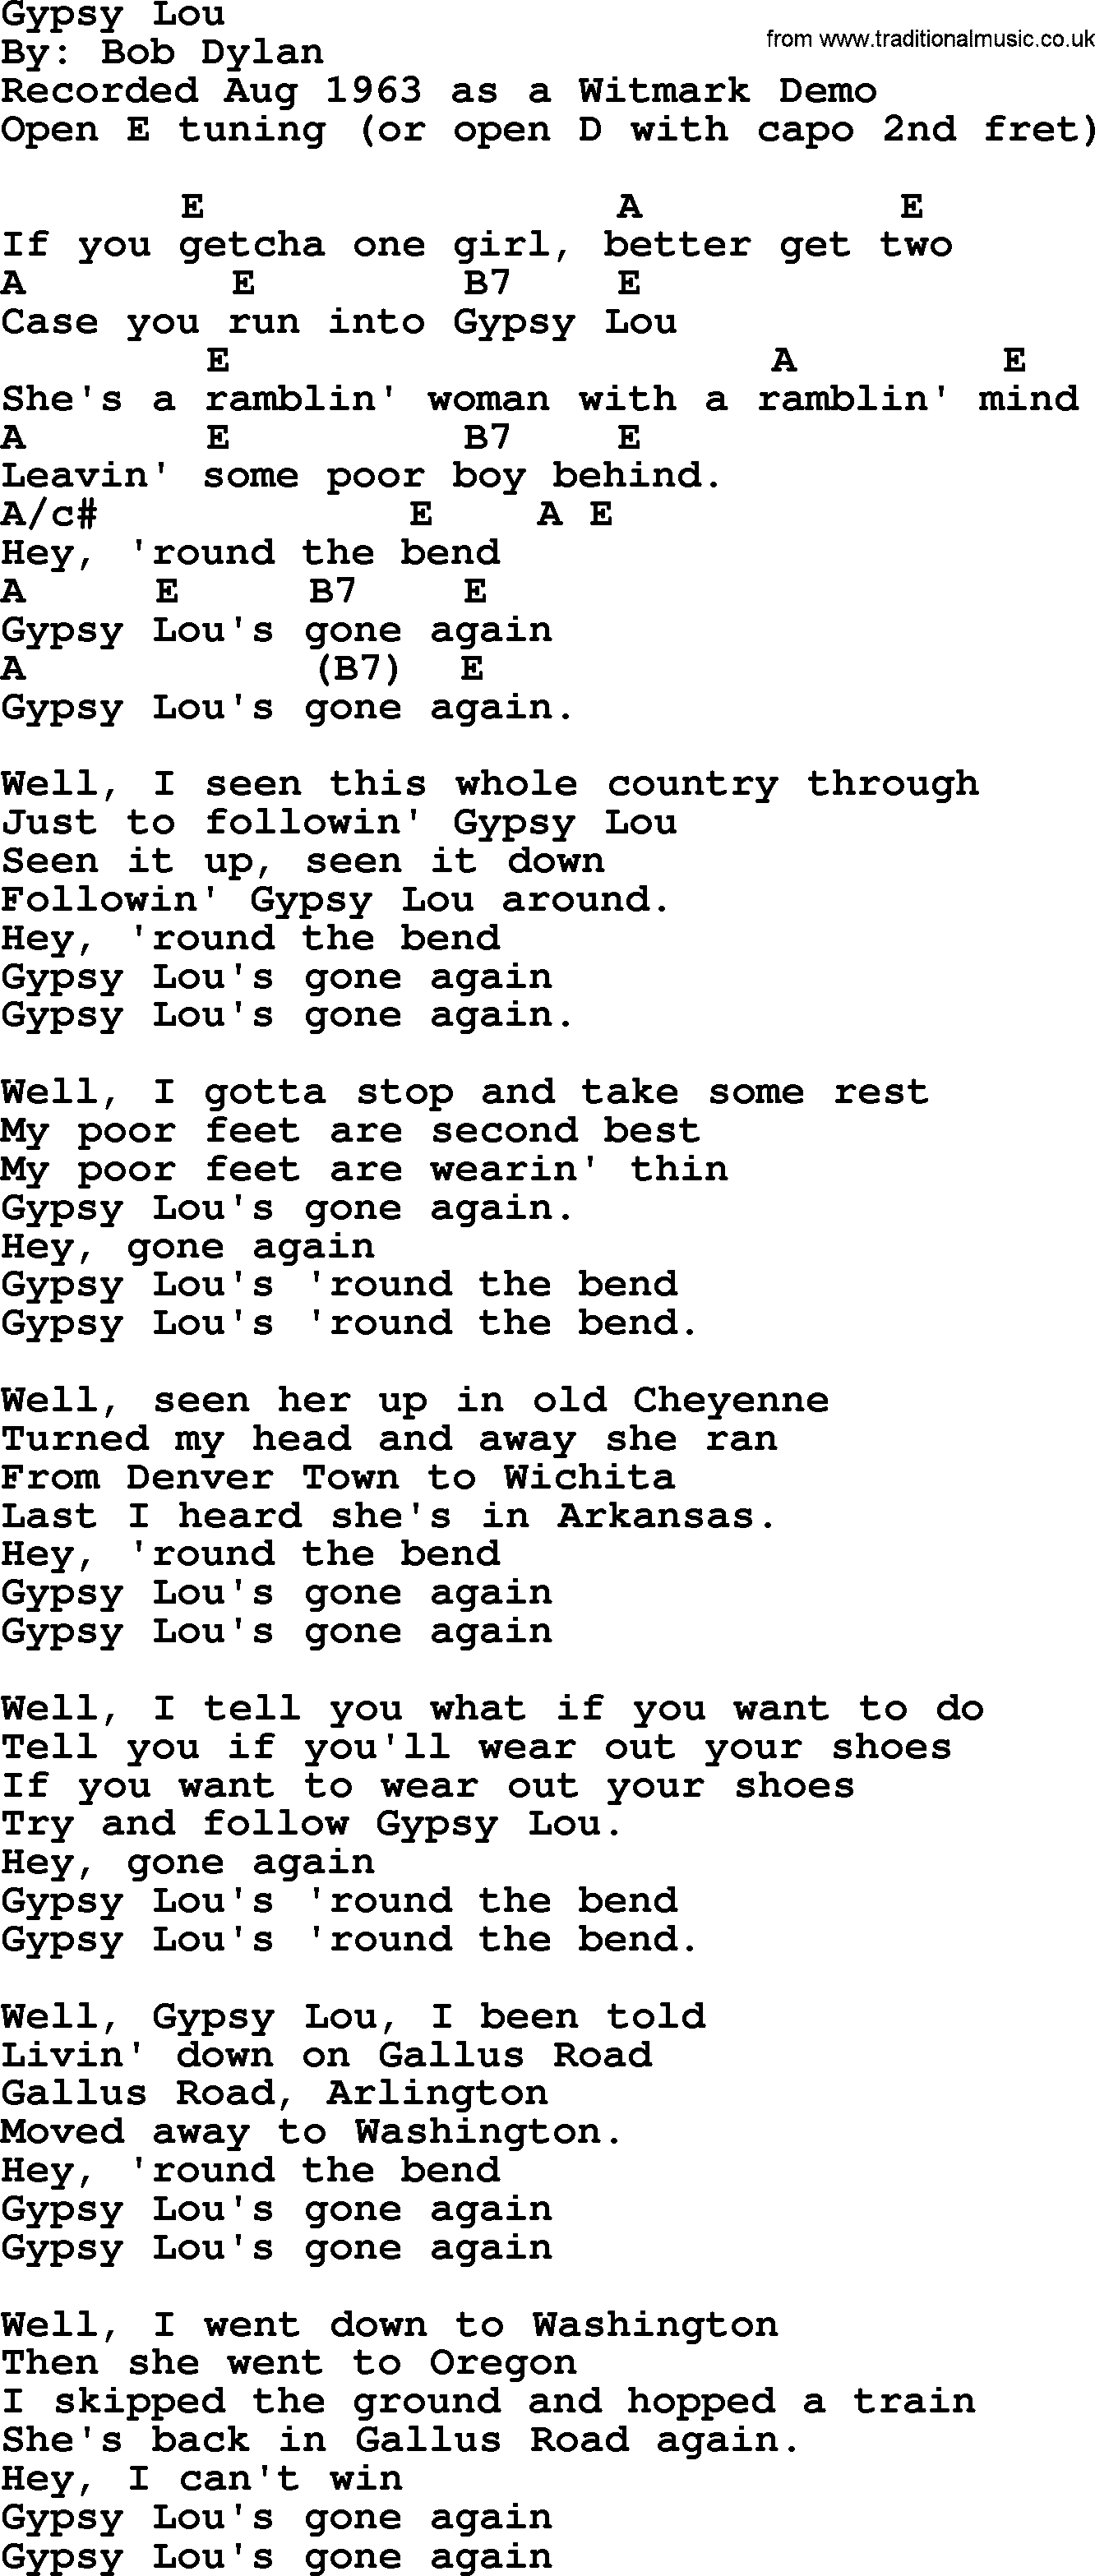 Bob Dylan song, lyrics with chords - Gypsy Lou